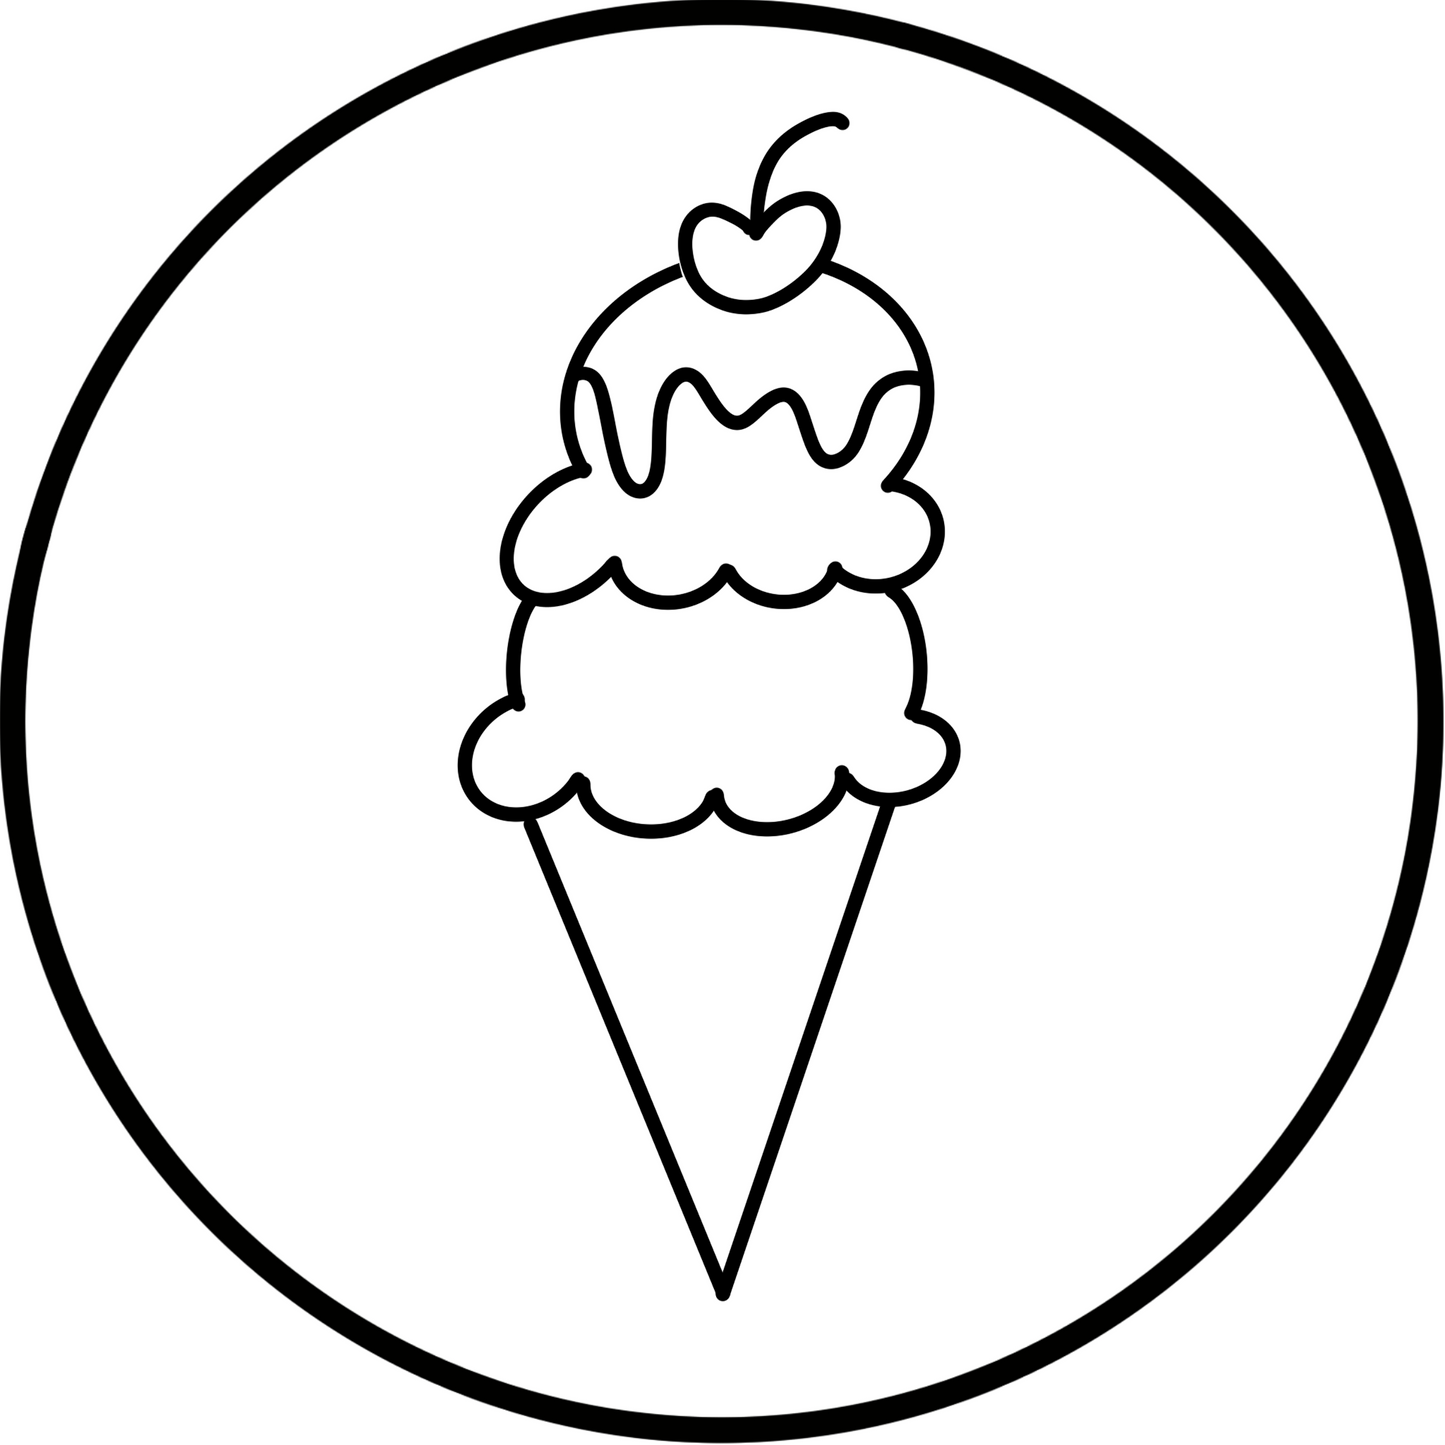 PDF: Ice Cream Cone 5-Stitch Sampler - Beginner Embroidery Pattern